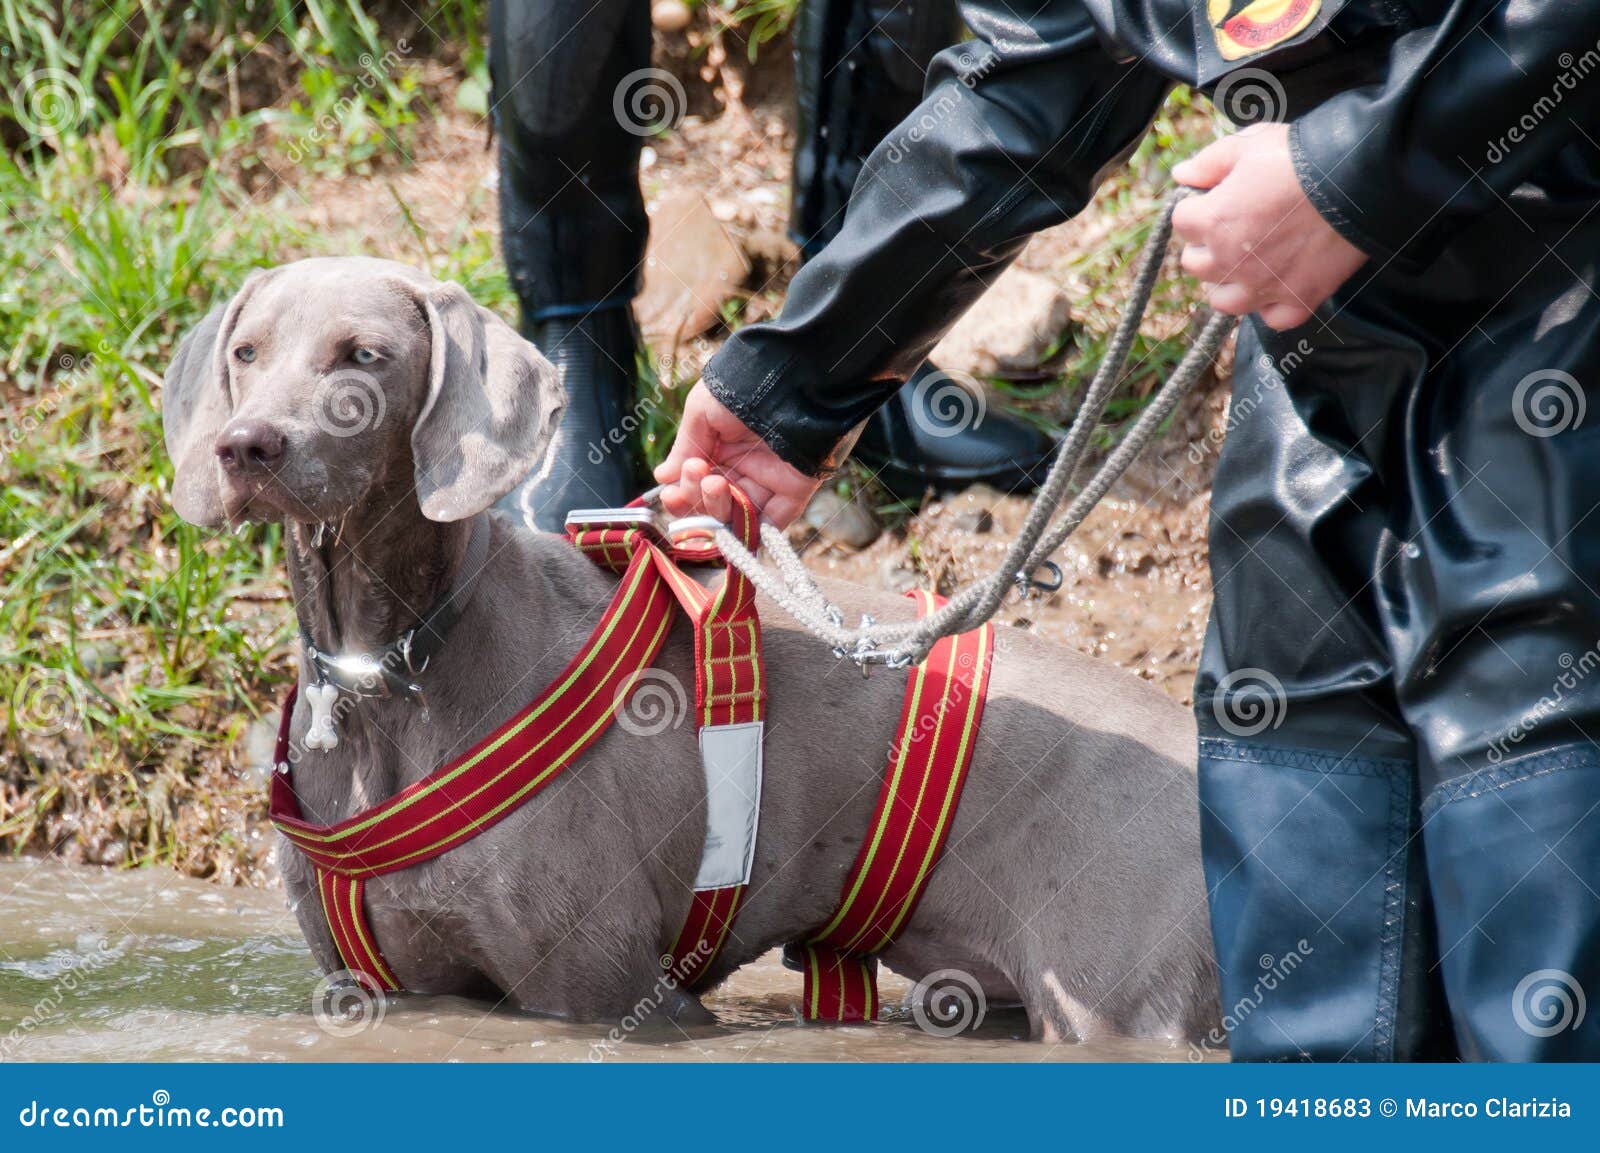 Rescue Dog Training Editorial Stock Photo - Image: 19418683